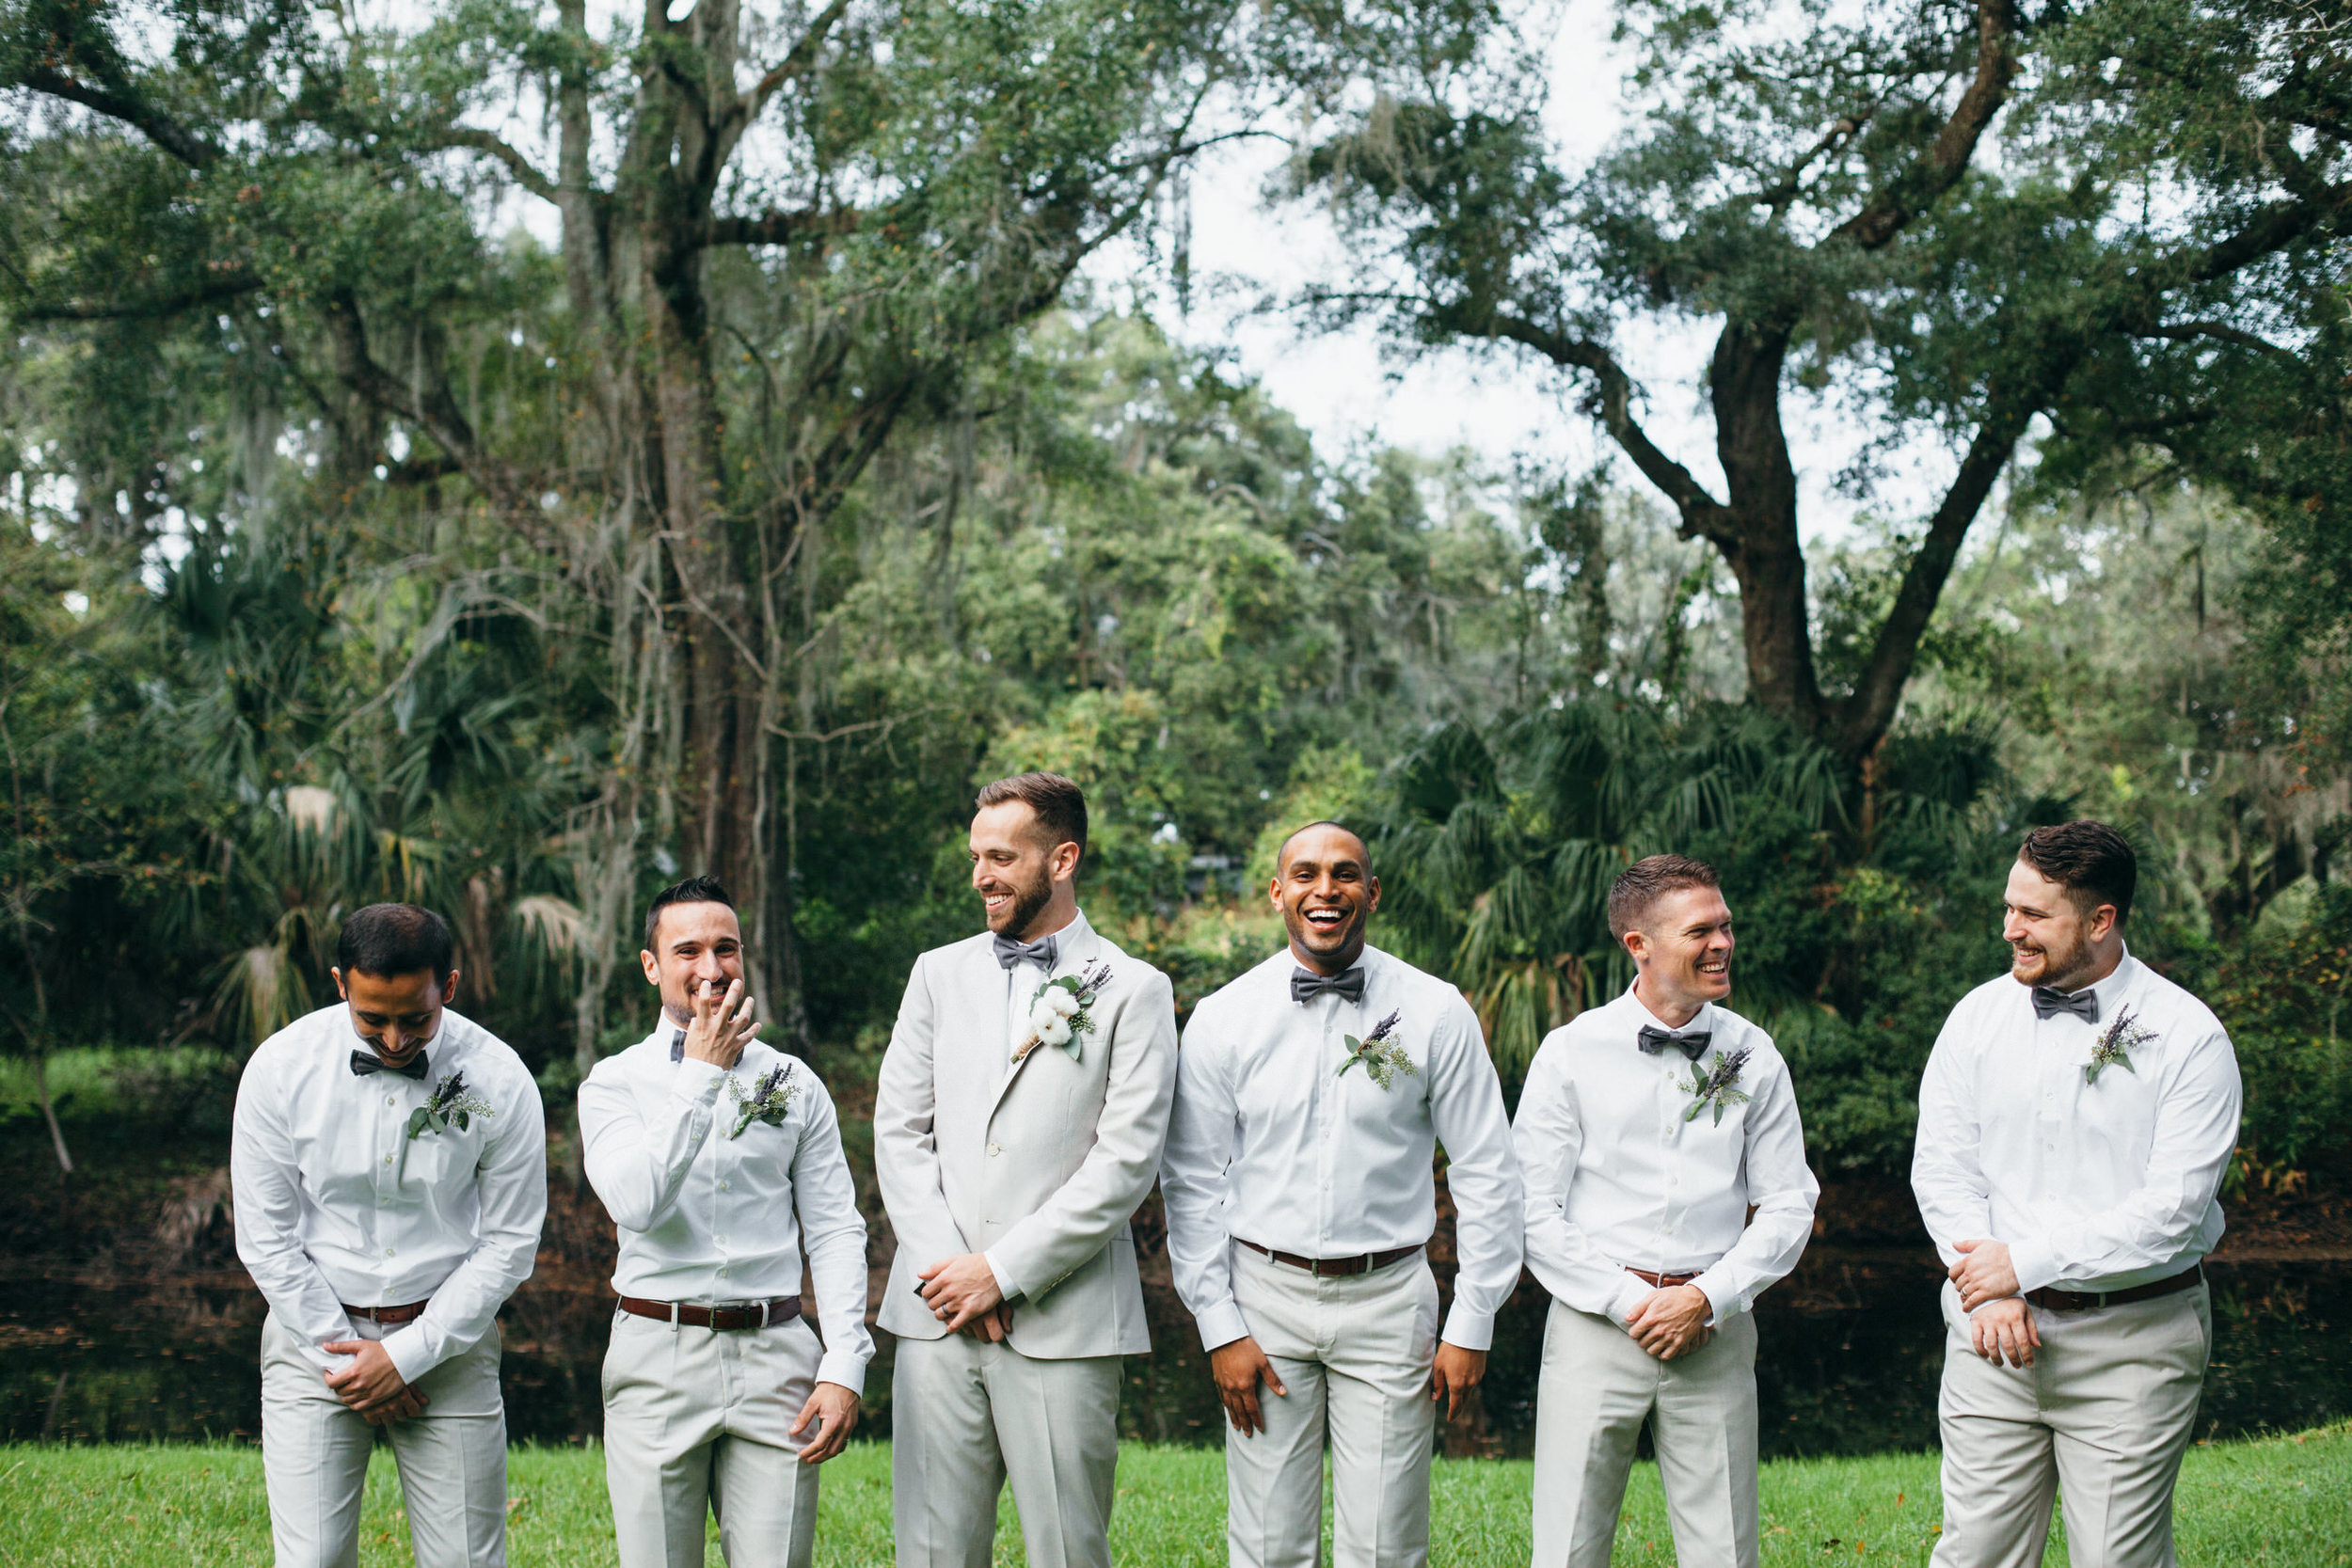 Wedding Groomsmen Plant City Florida Photographer Benjamin Hewitt Photography